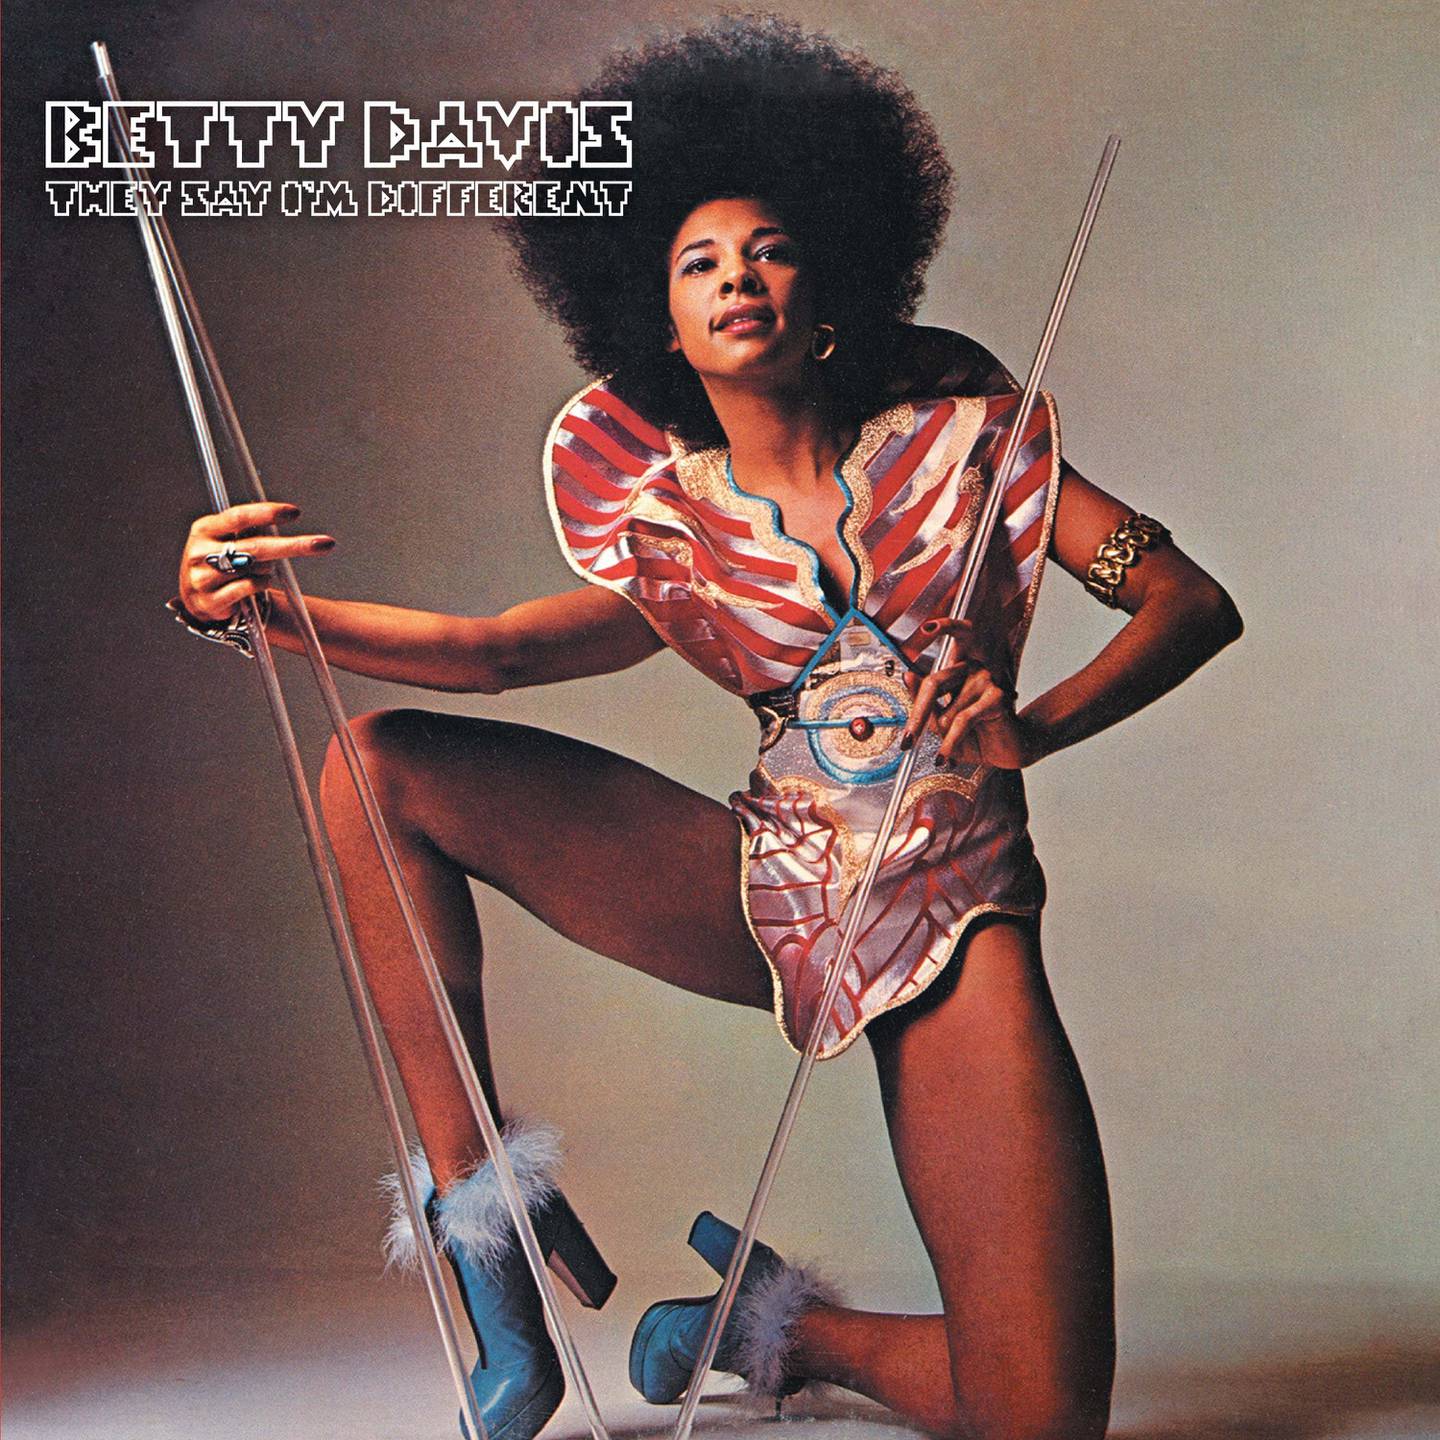 Betty Davies på omslaget av albumet "They Say I'm Different" i 1974.